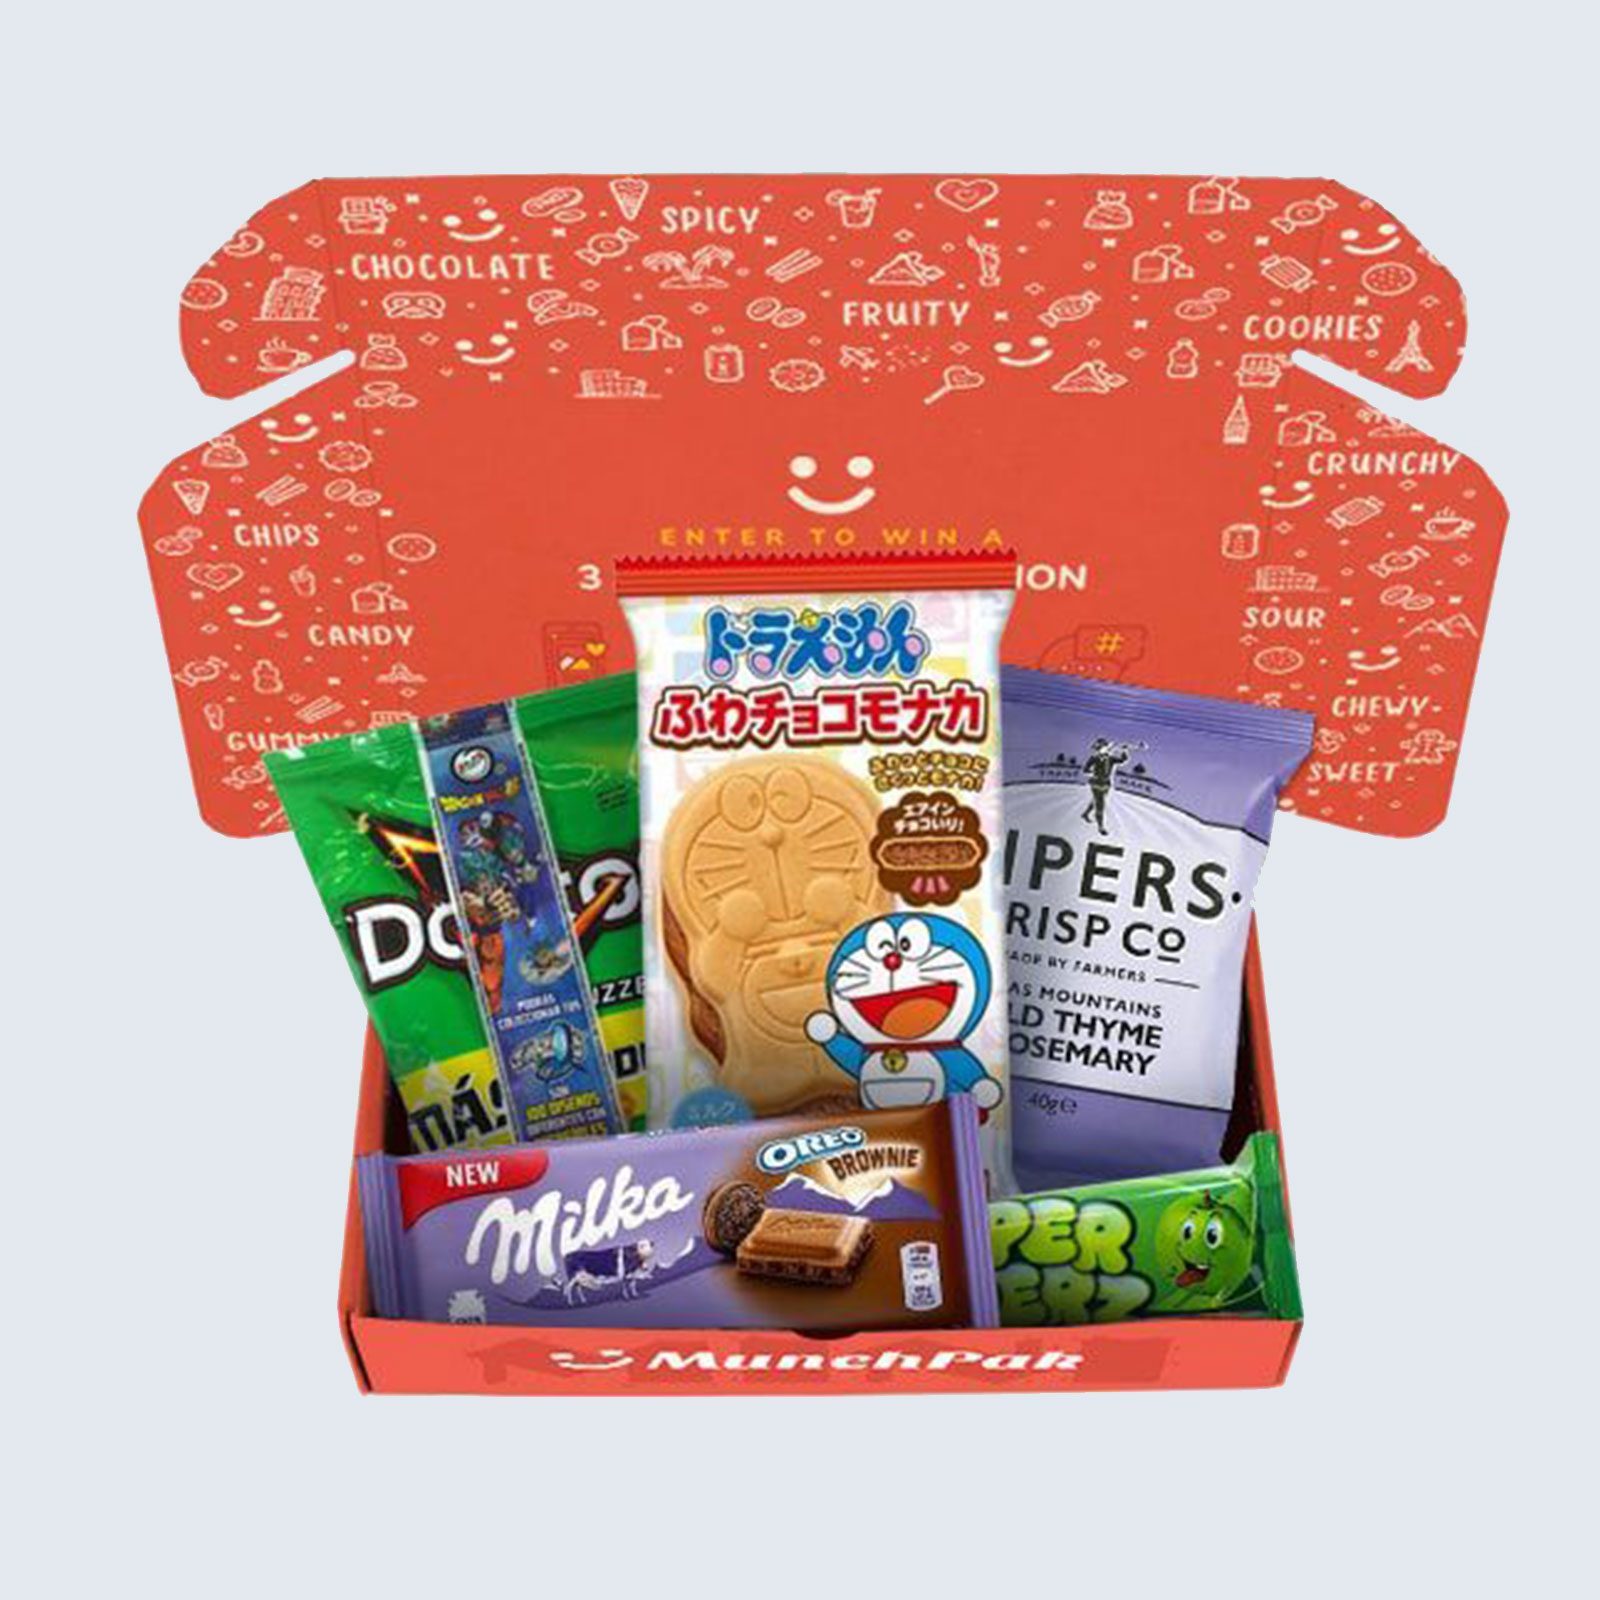 For snackers: MunchPak Snack Box